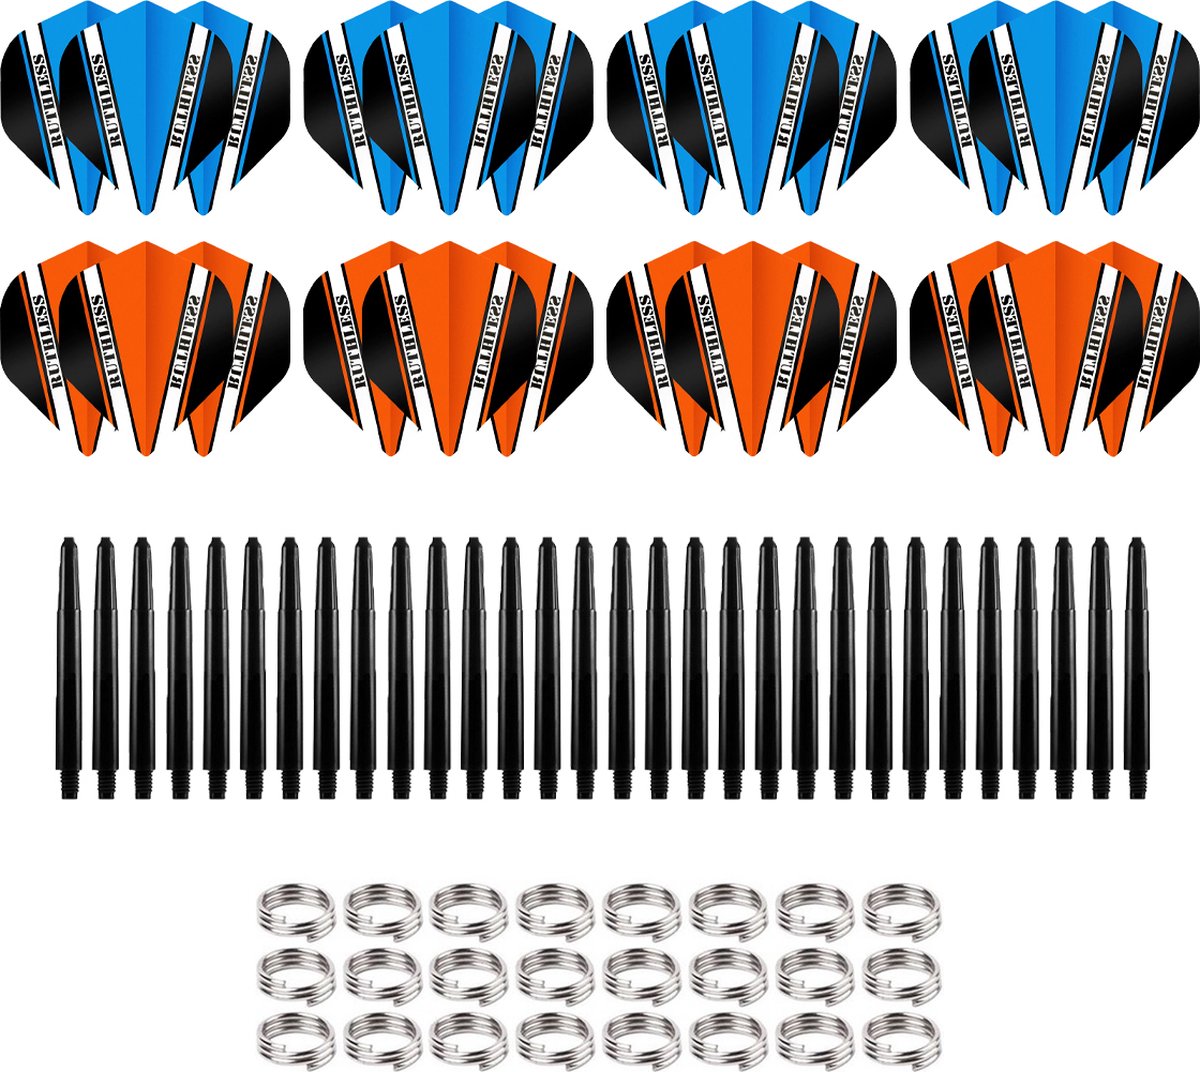 Dragon Darts Dart Flights en Dart Shafts - Multipack - 26 Sets - 78 Stuks - Veerringetjes - Extra Stevig - Darts Flights - Darts Shafts - Cadeau - Model 1 - Blauw/Oranje